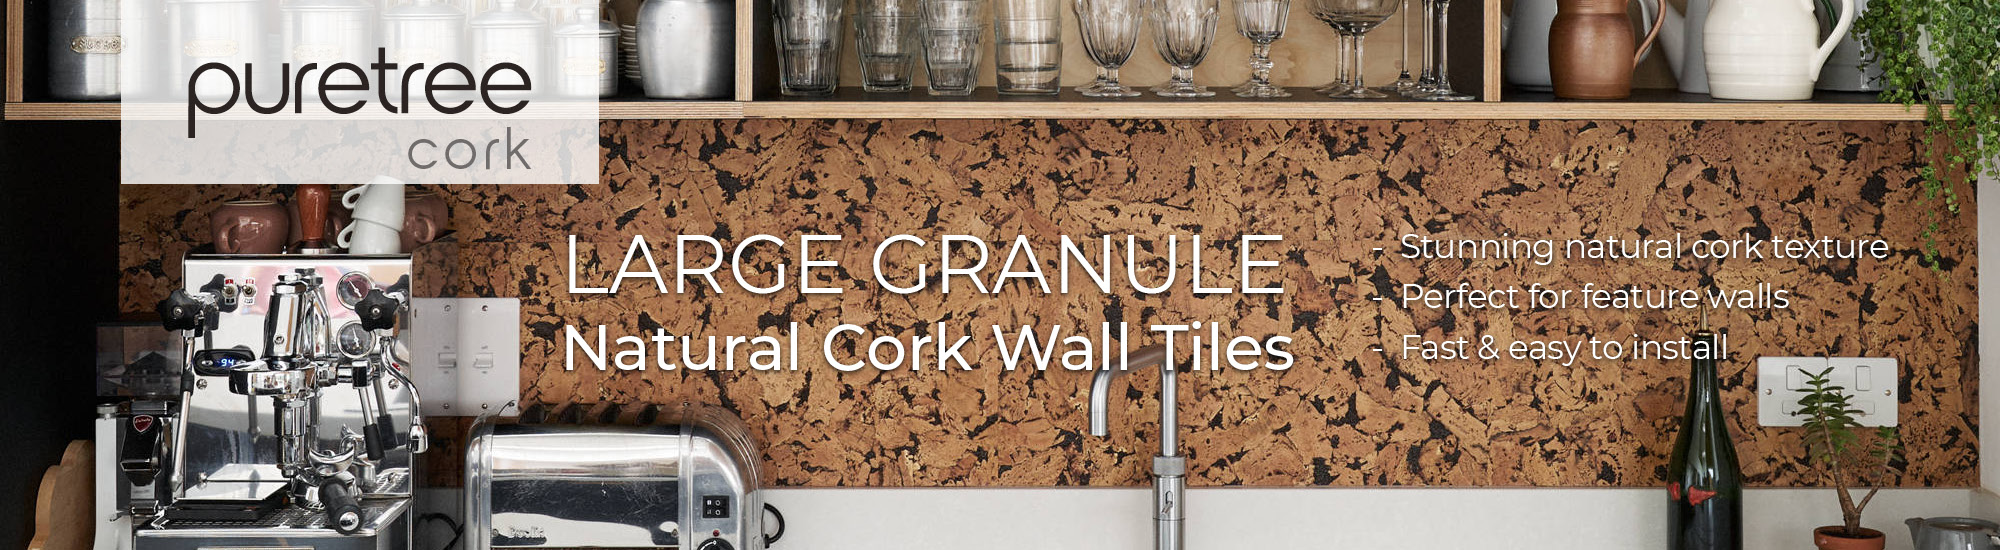 Large Granule Cork Wall Tiles - Banner